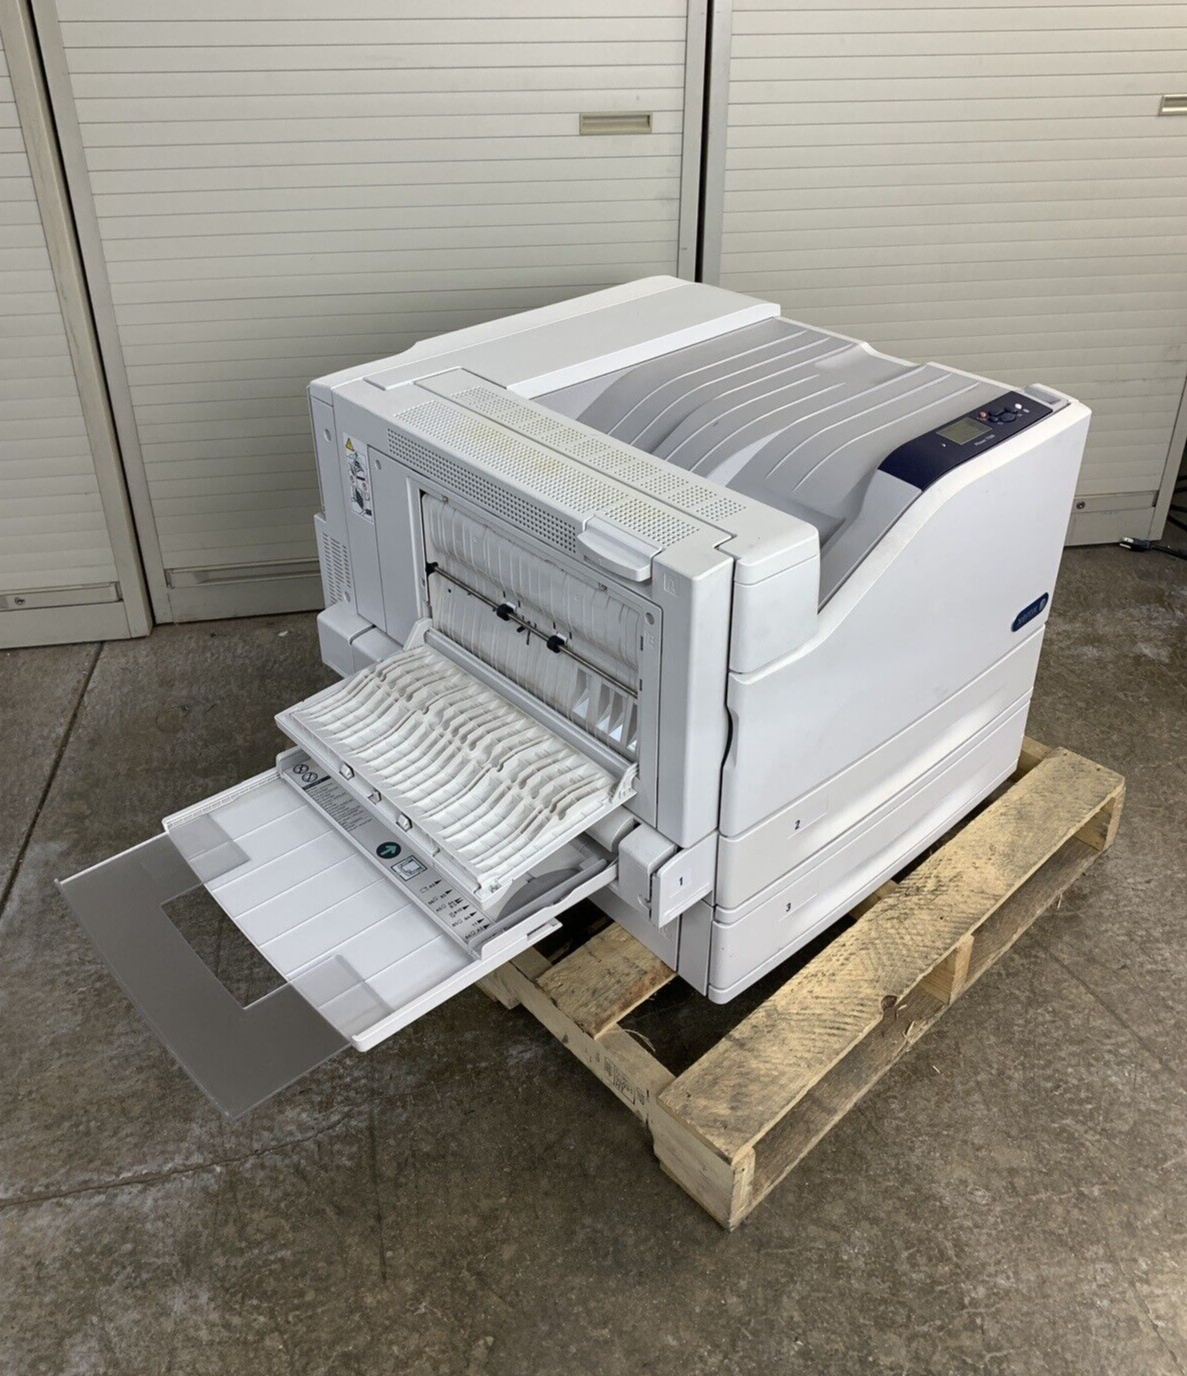 Xerox Phaser 7500DN Monochrome Color Laser Printer Duplex Network 35 PPM